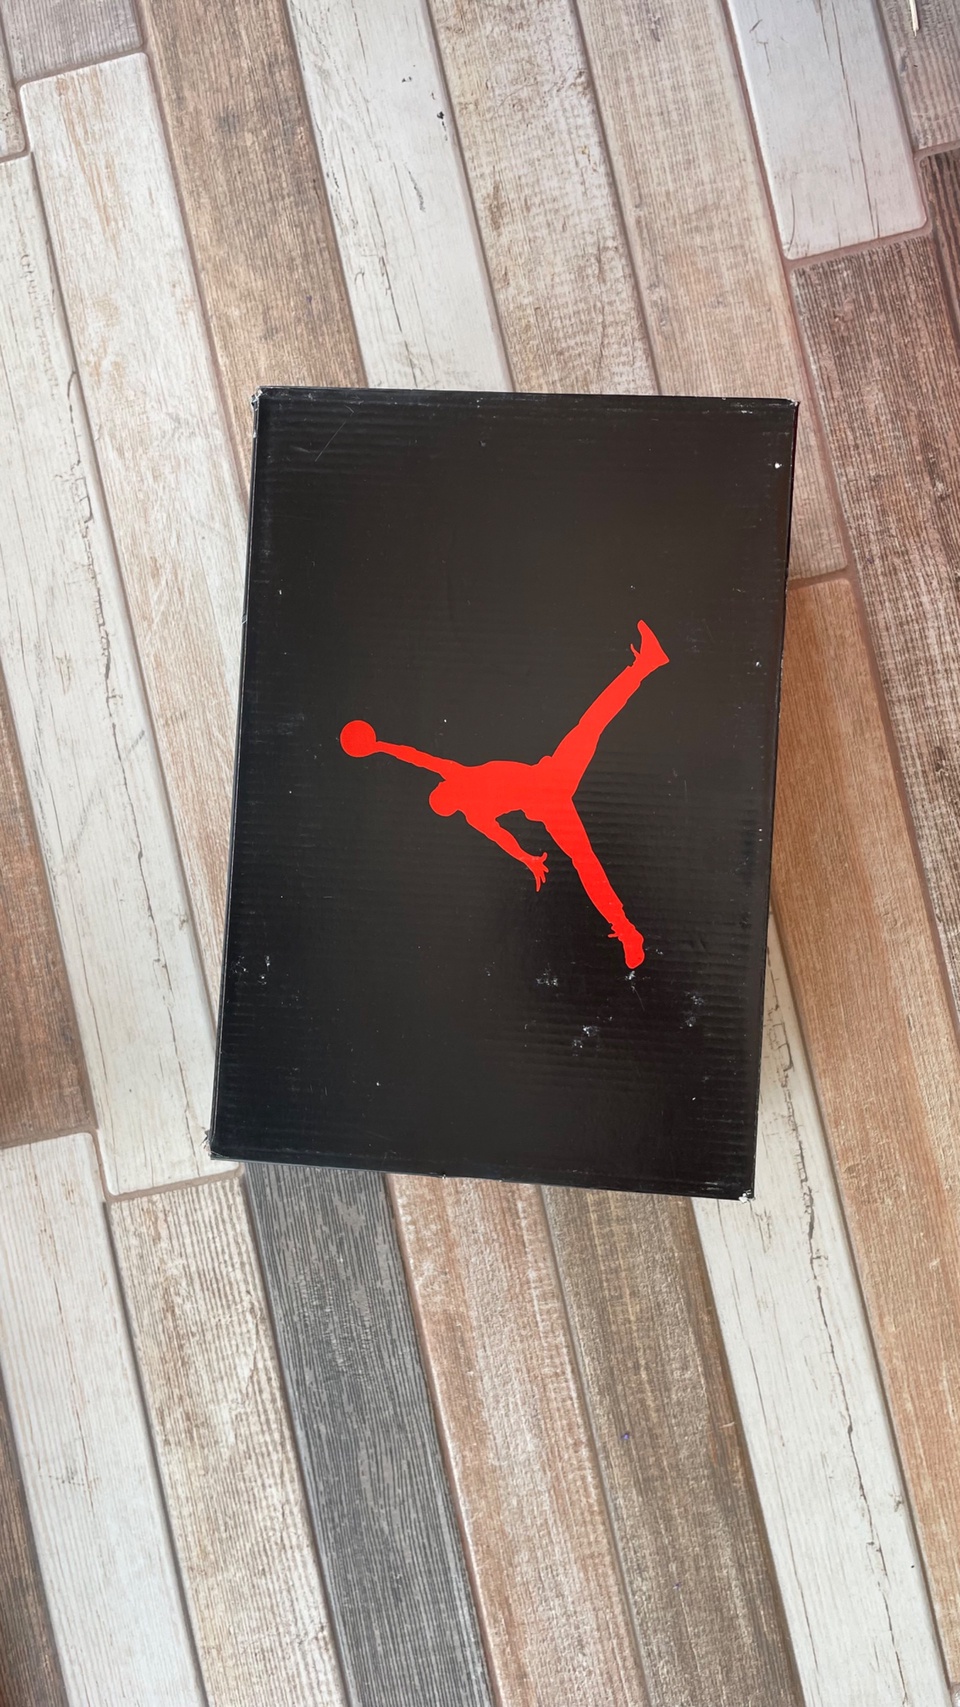 Nike Air Jordan retro 4 - 4 850 ₽, заказать онлайн.